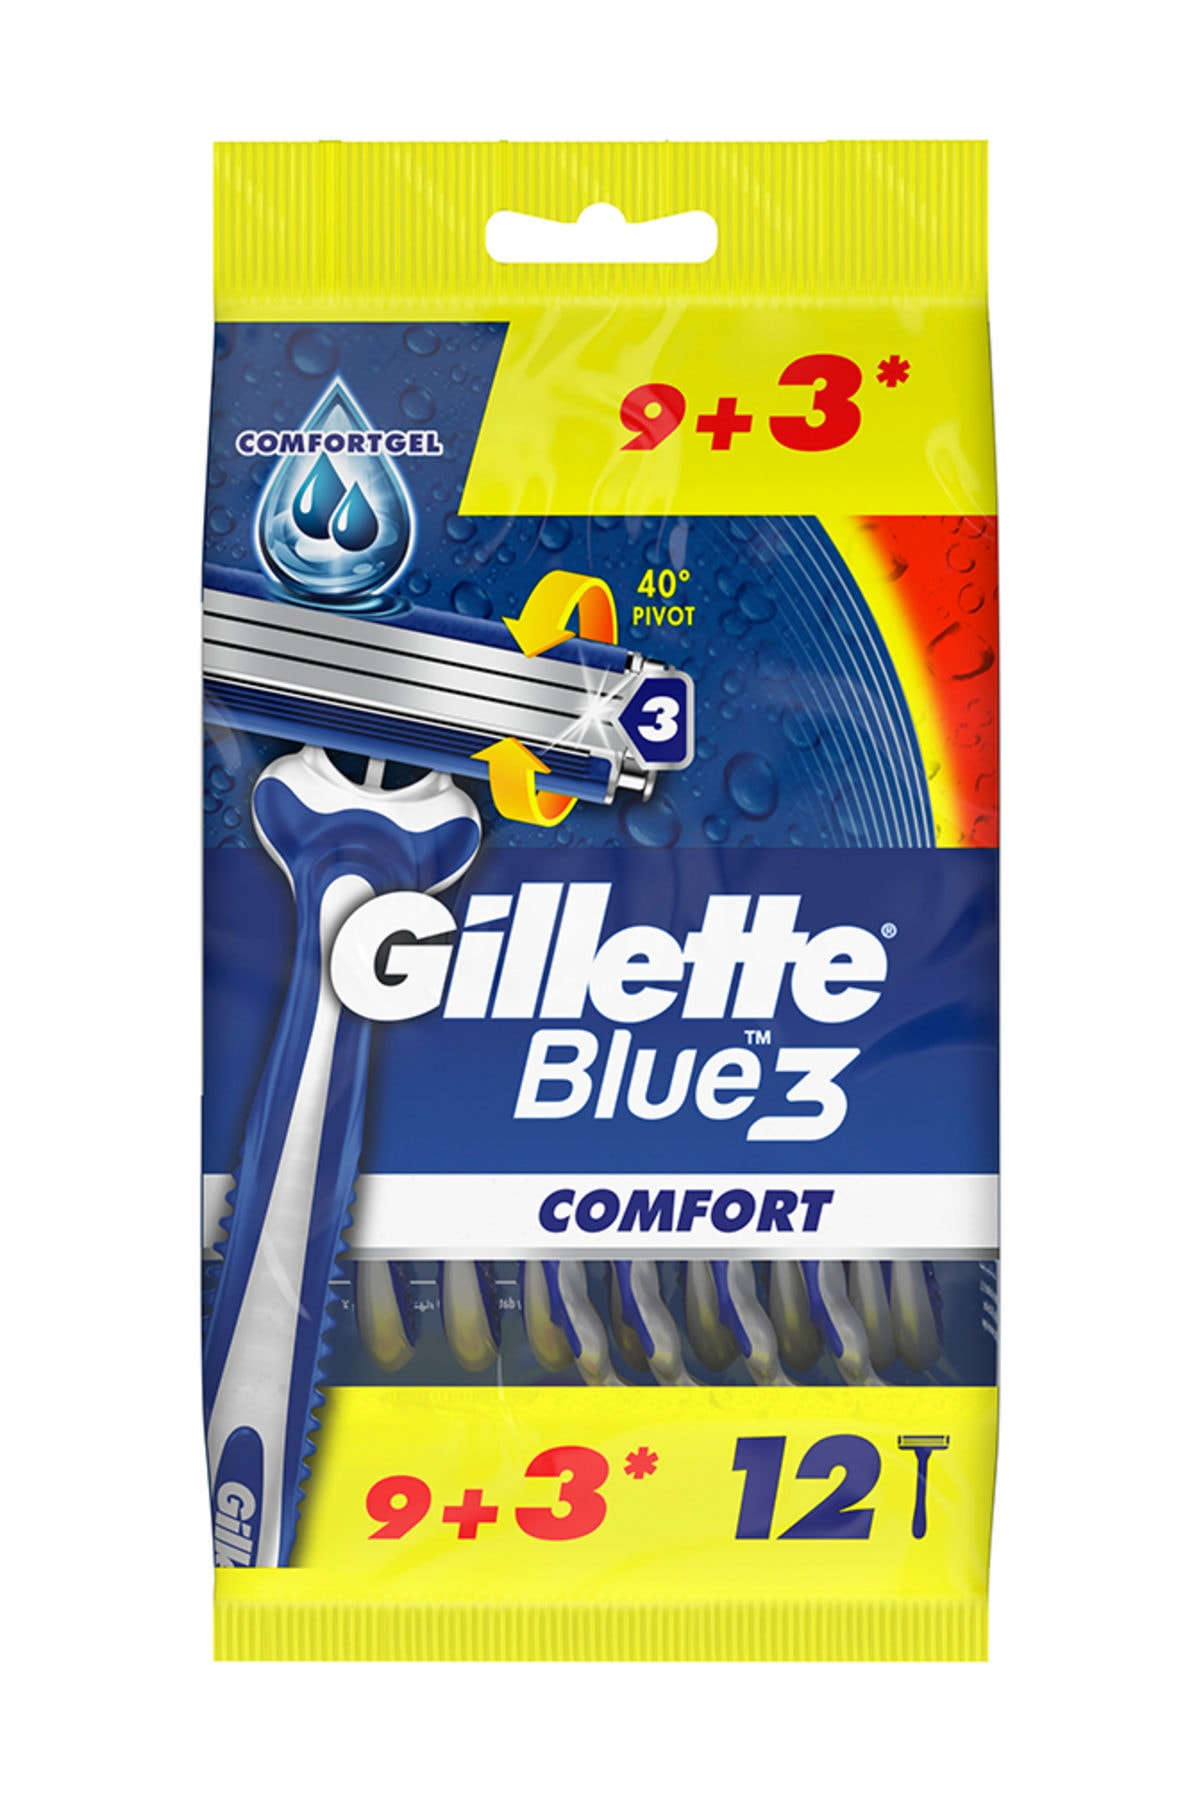 Gillette Gillette Blue 3 Tıraş Bıçağı 9+3 ZO6310